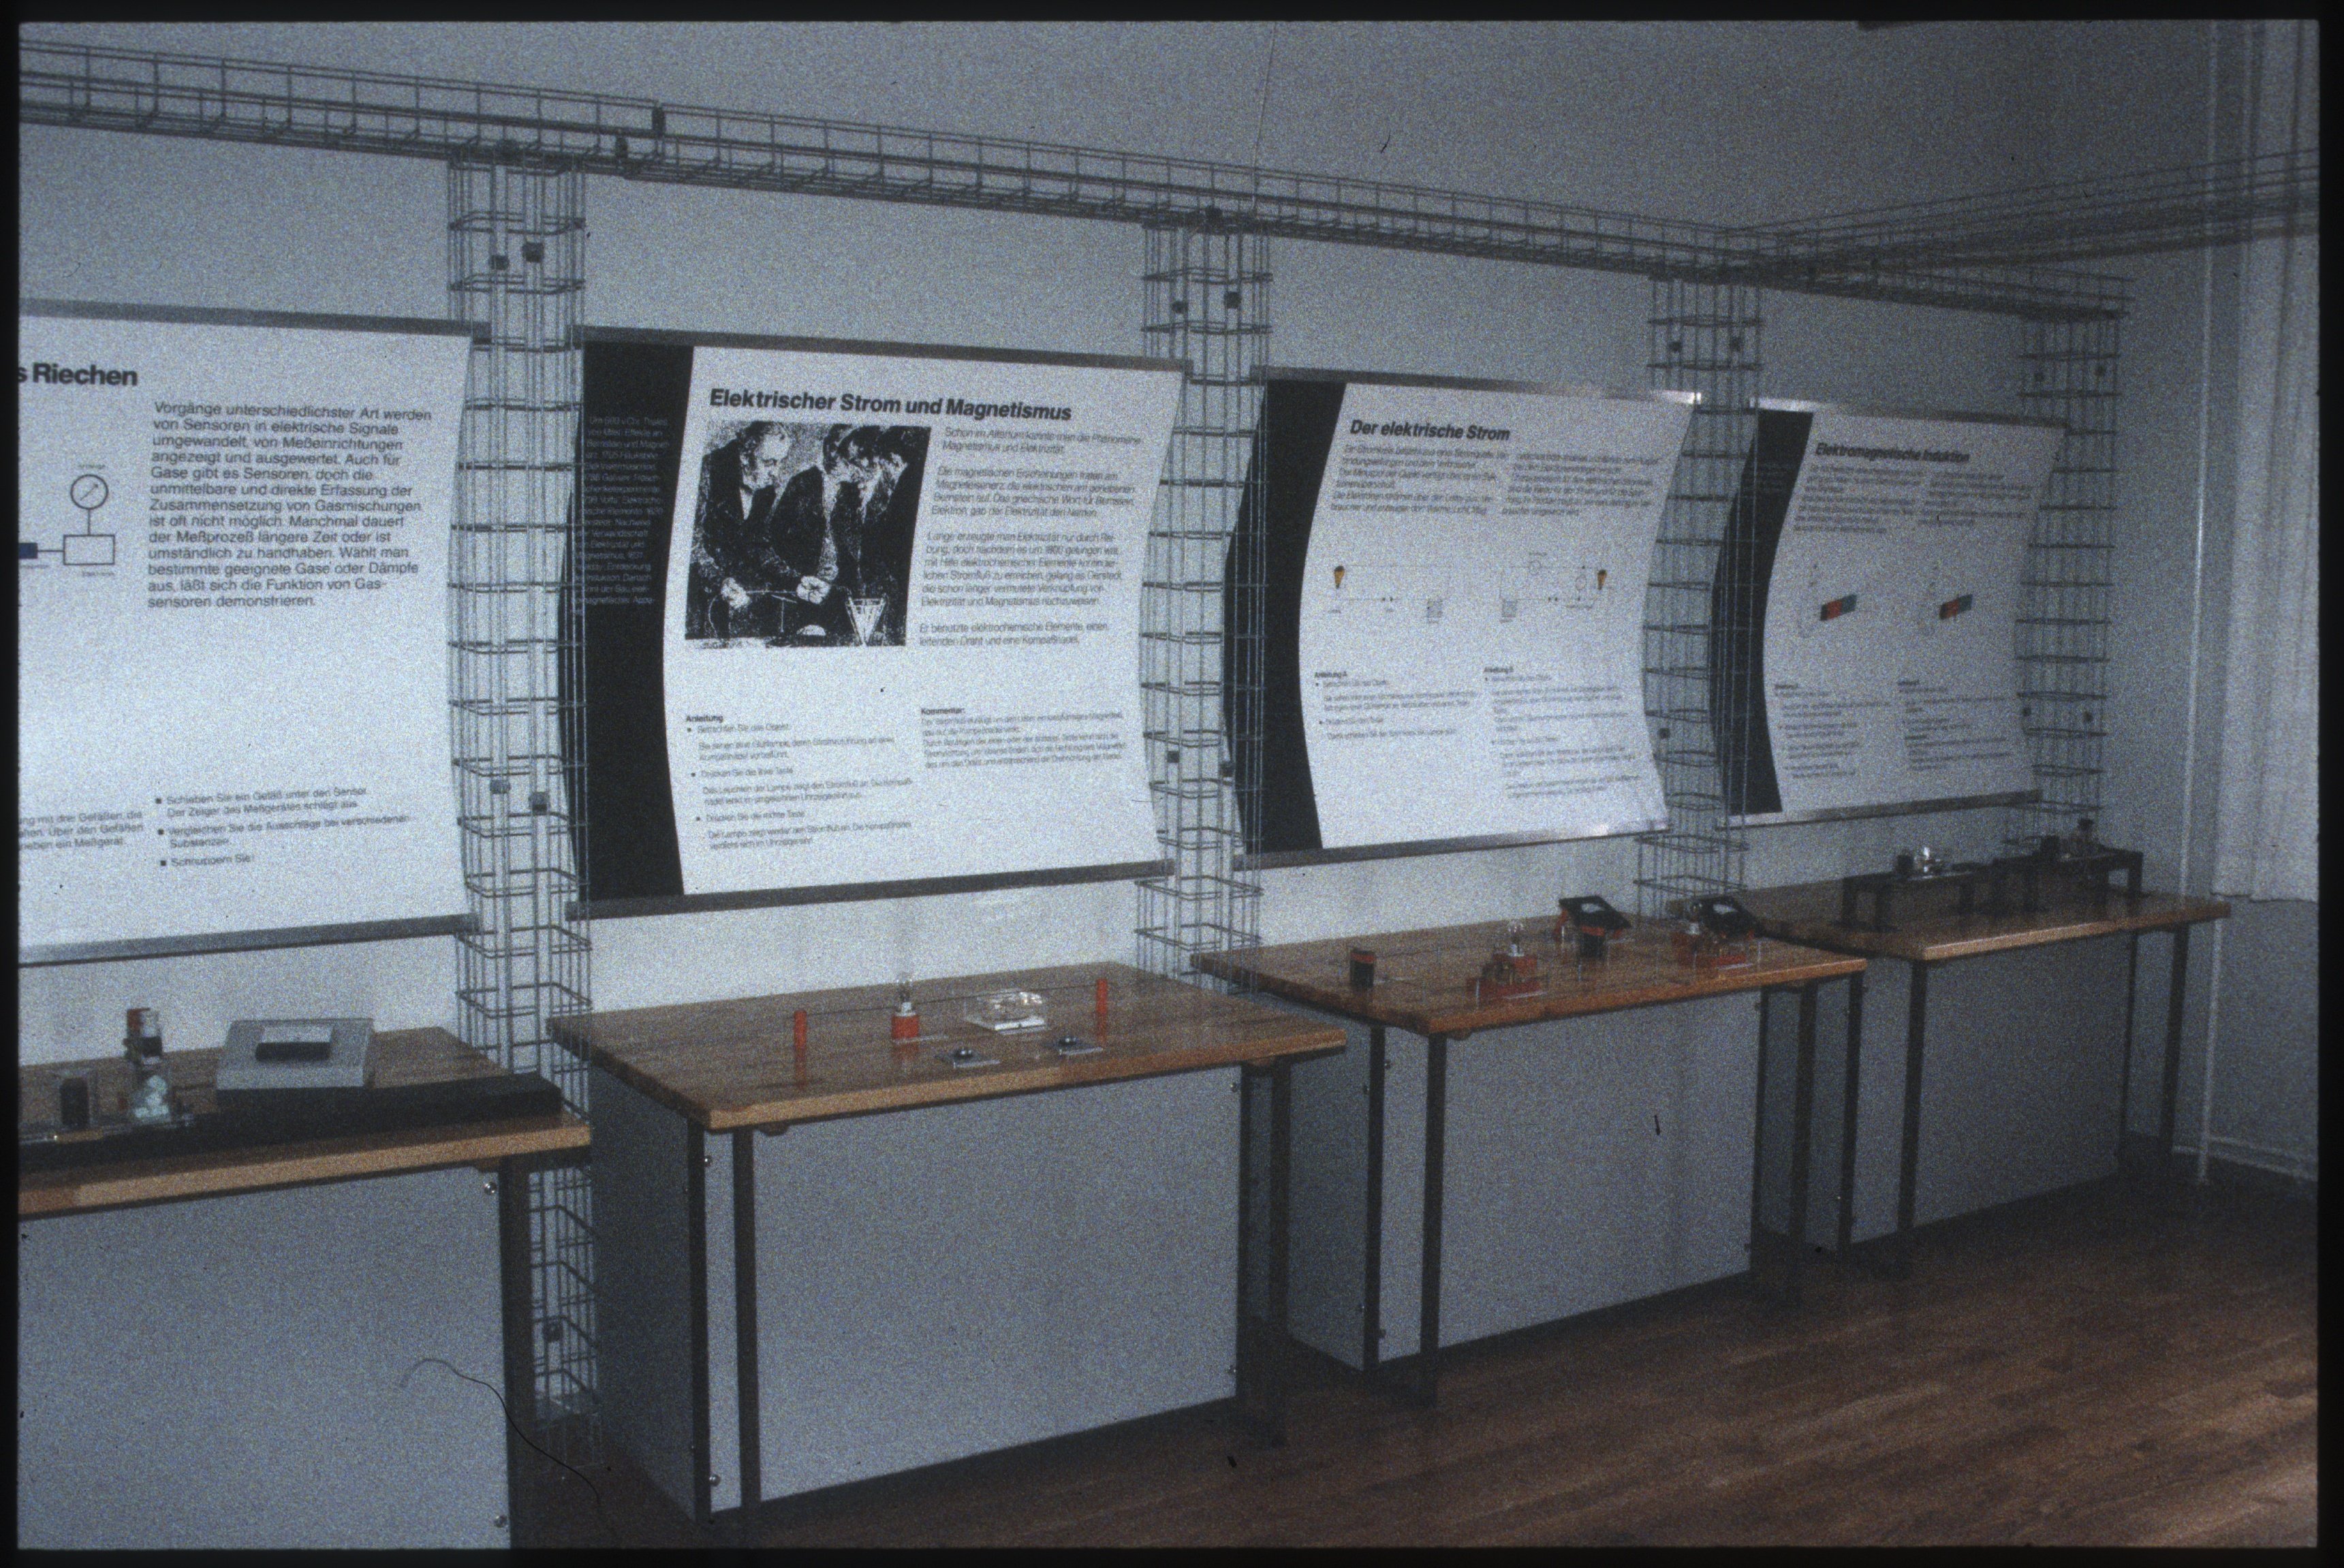 SDTB_Archiv_VI.1.025 00248_305 (Stiftung Deutsches Technikmuseum Berlin CC0)